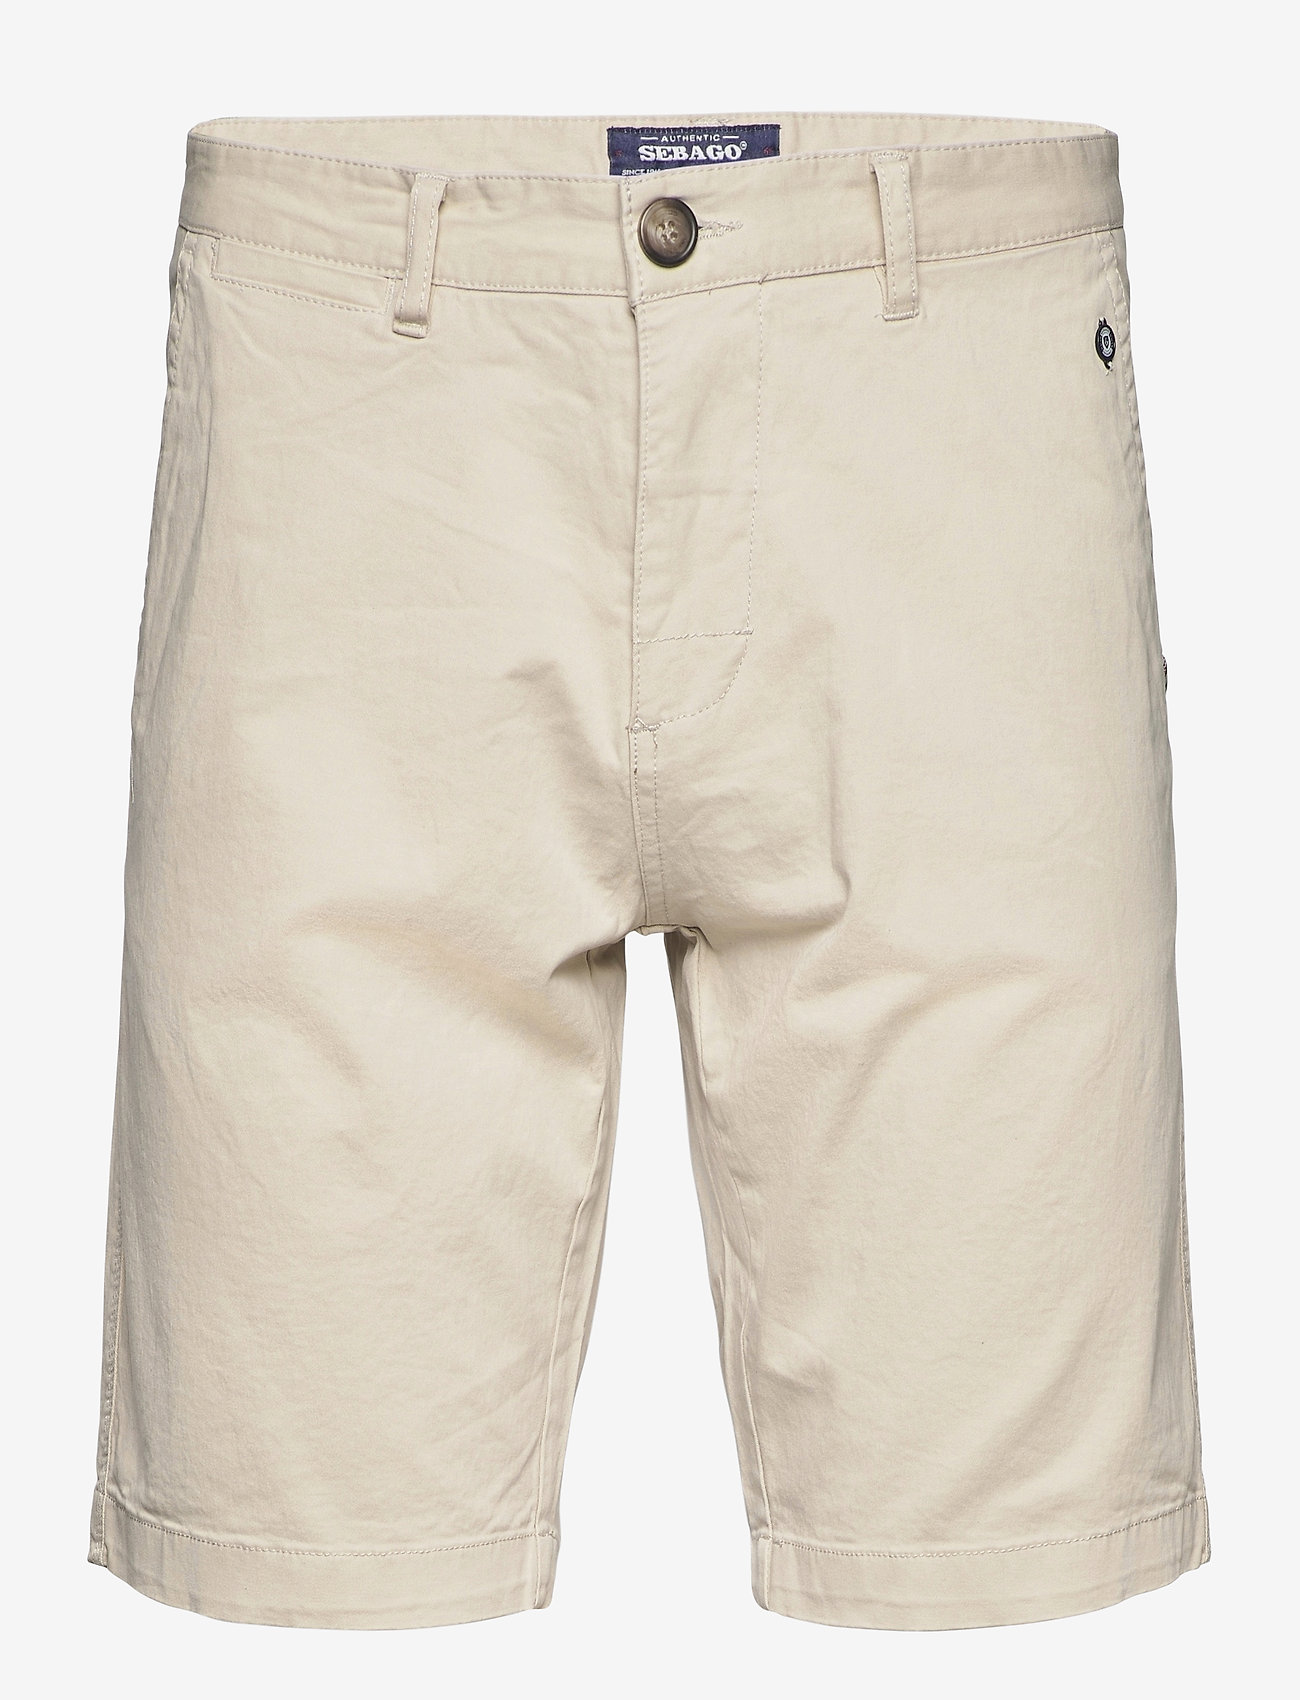 Sebago - DKS Belted Bermuda Shorts - chinos shorts - dark sand - 1